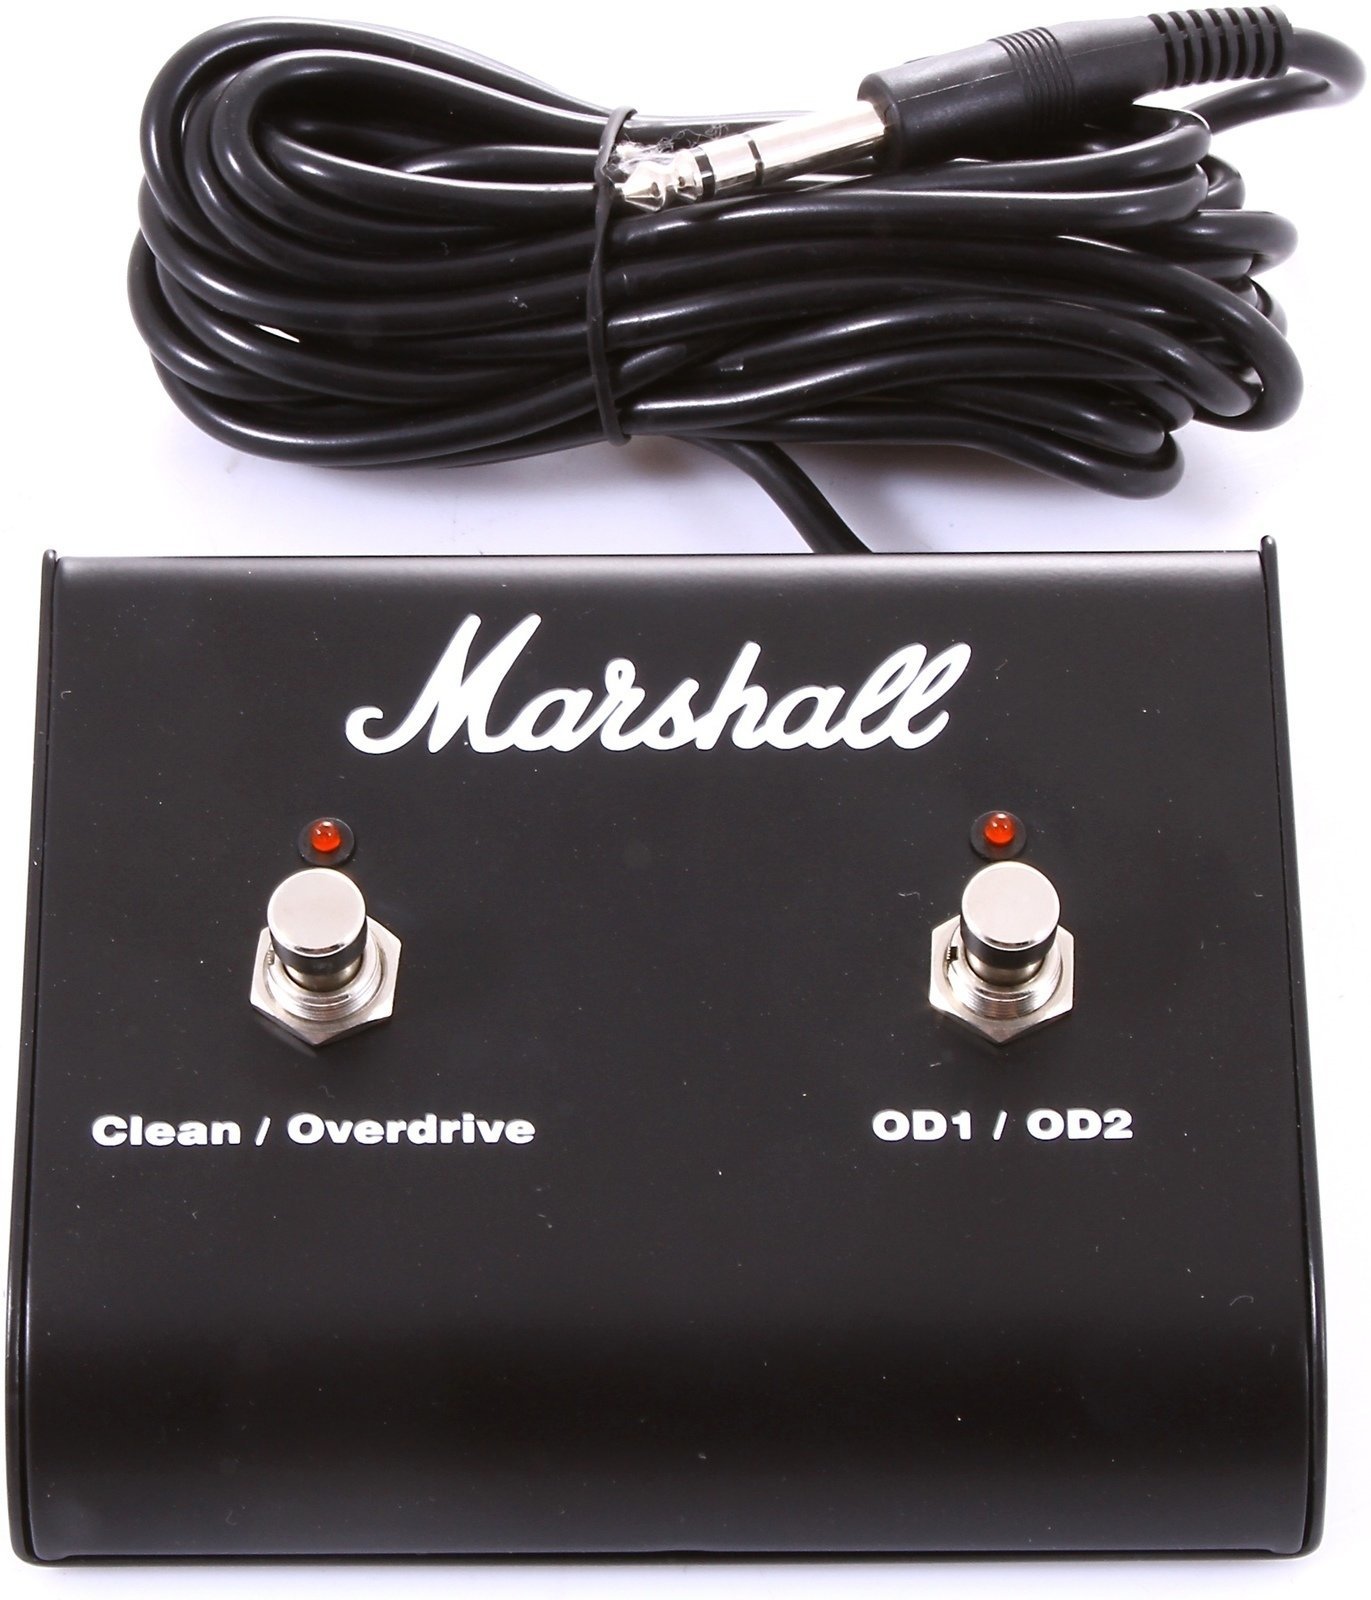 Voetschakelaar Marshall PEDL 10013 Footswitch Dual-LED